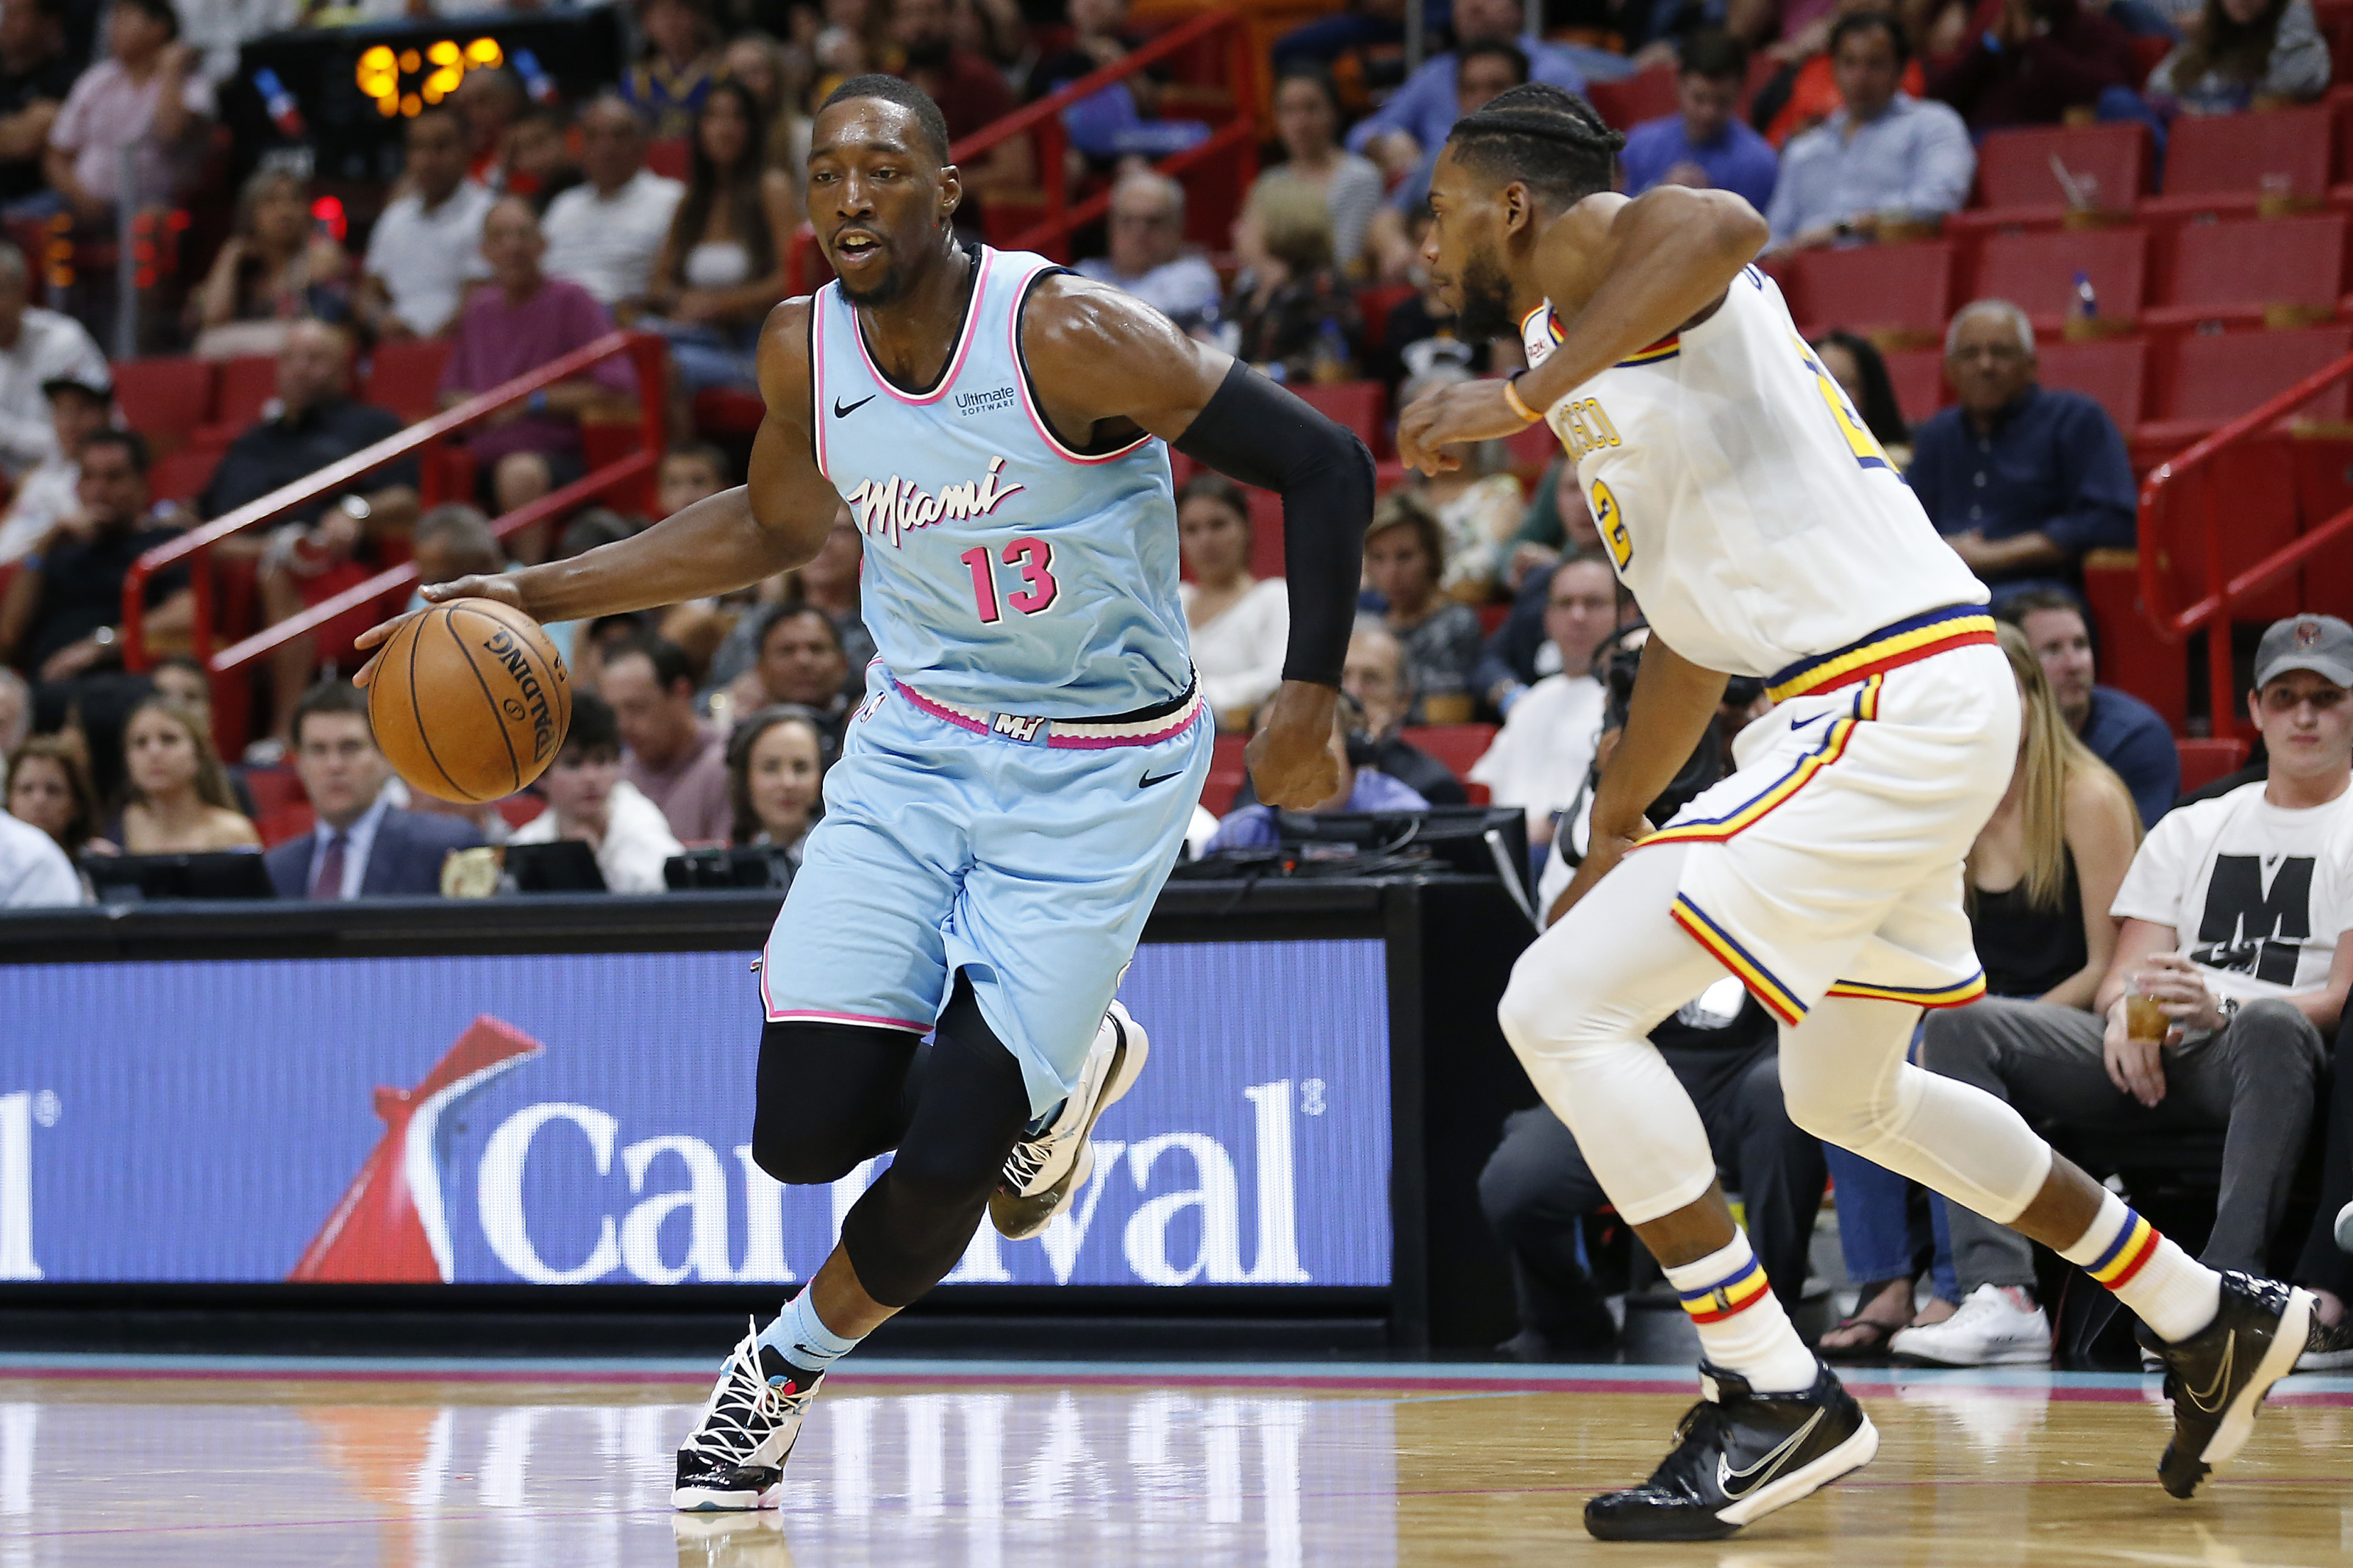 NBA 2K predicts a trap game loss for the Miami Heat in San Francisco